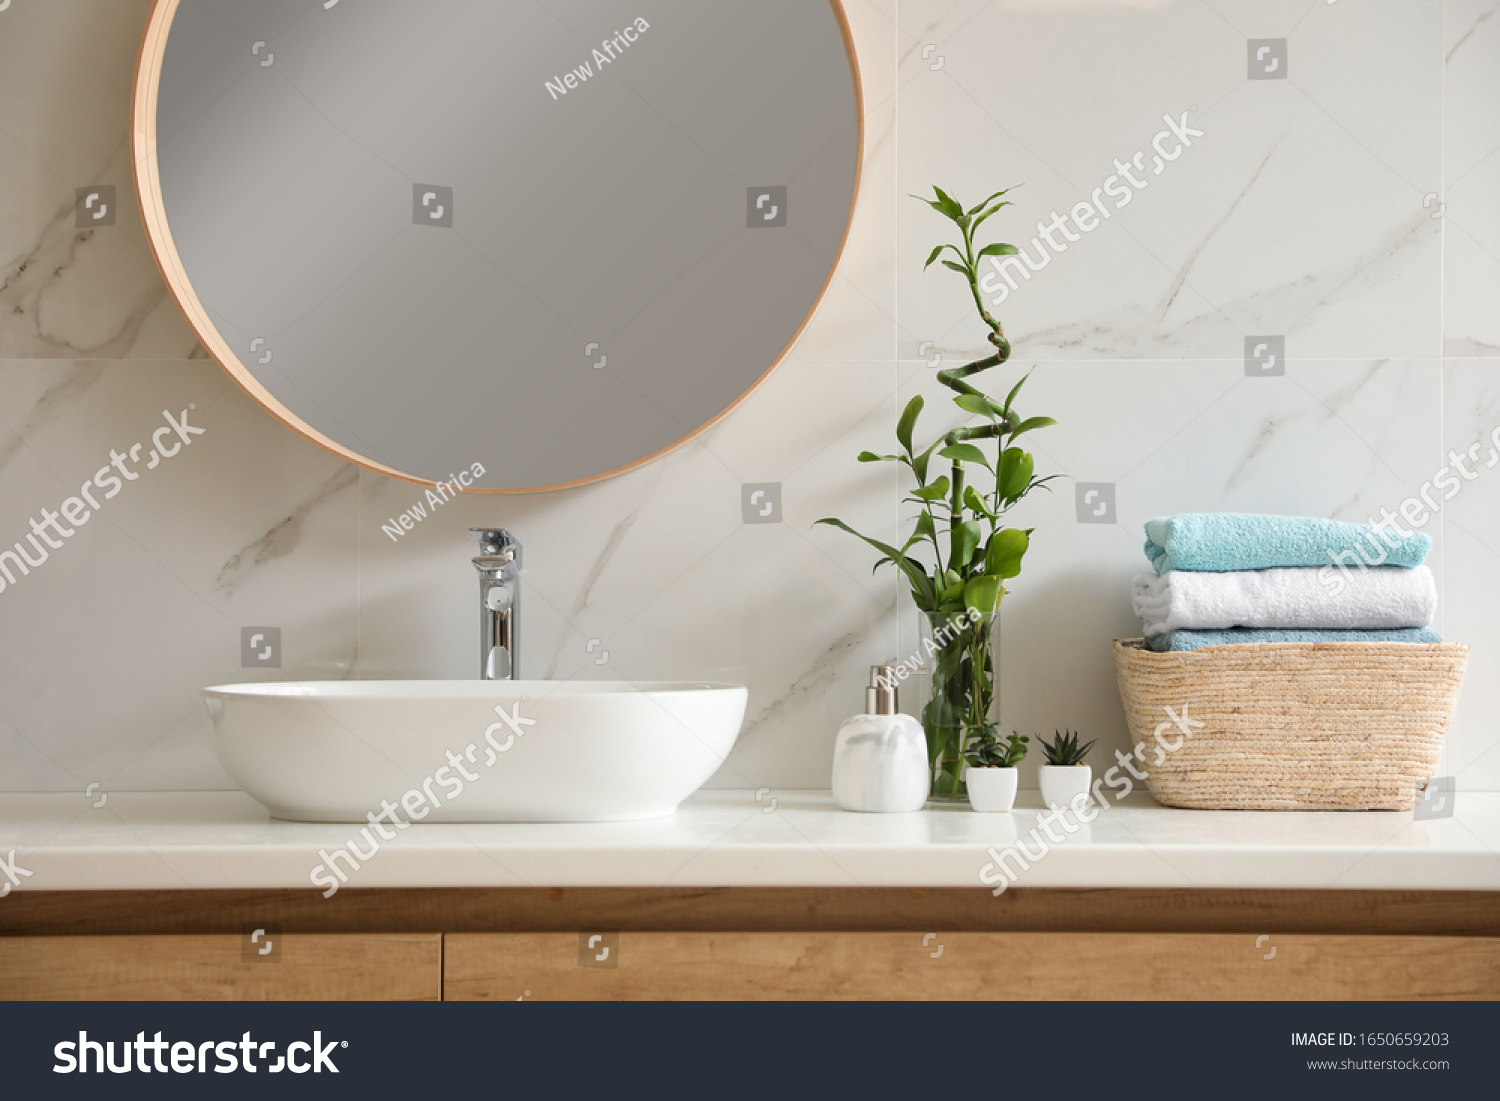 Beautiful green plants near vessel sink on countertop in bathroom. Interior design elements #1650659203